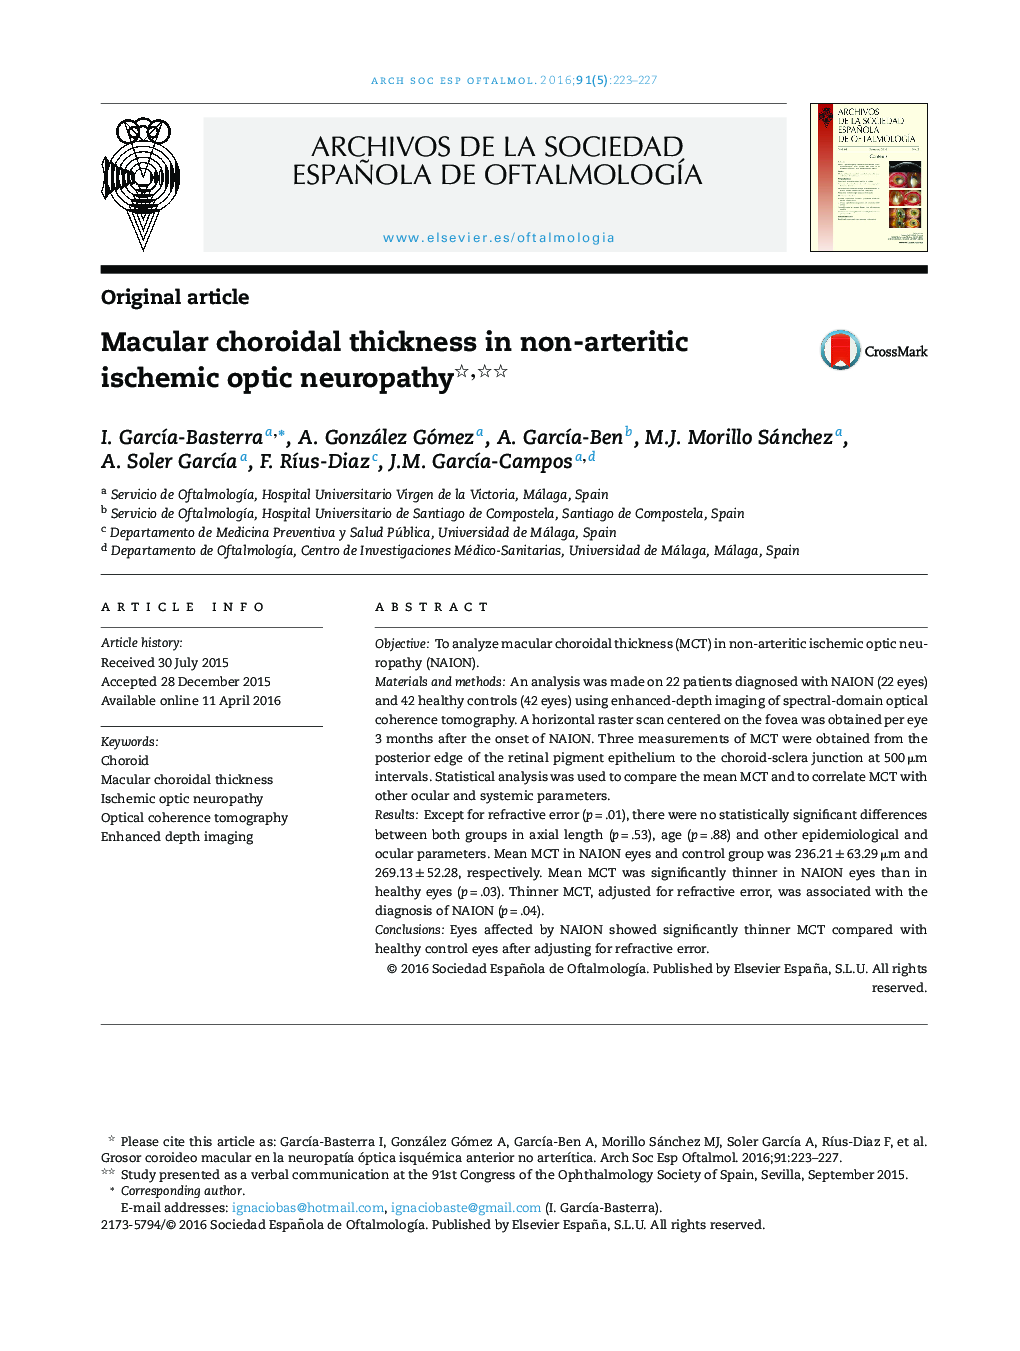 Macular choroidal thickness in non-arteritic ischemic optic neuropathy 